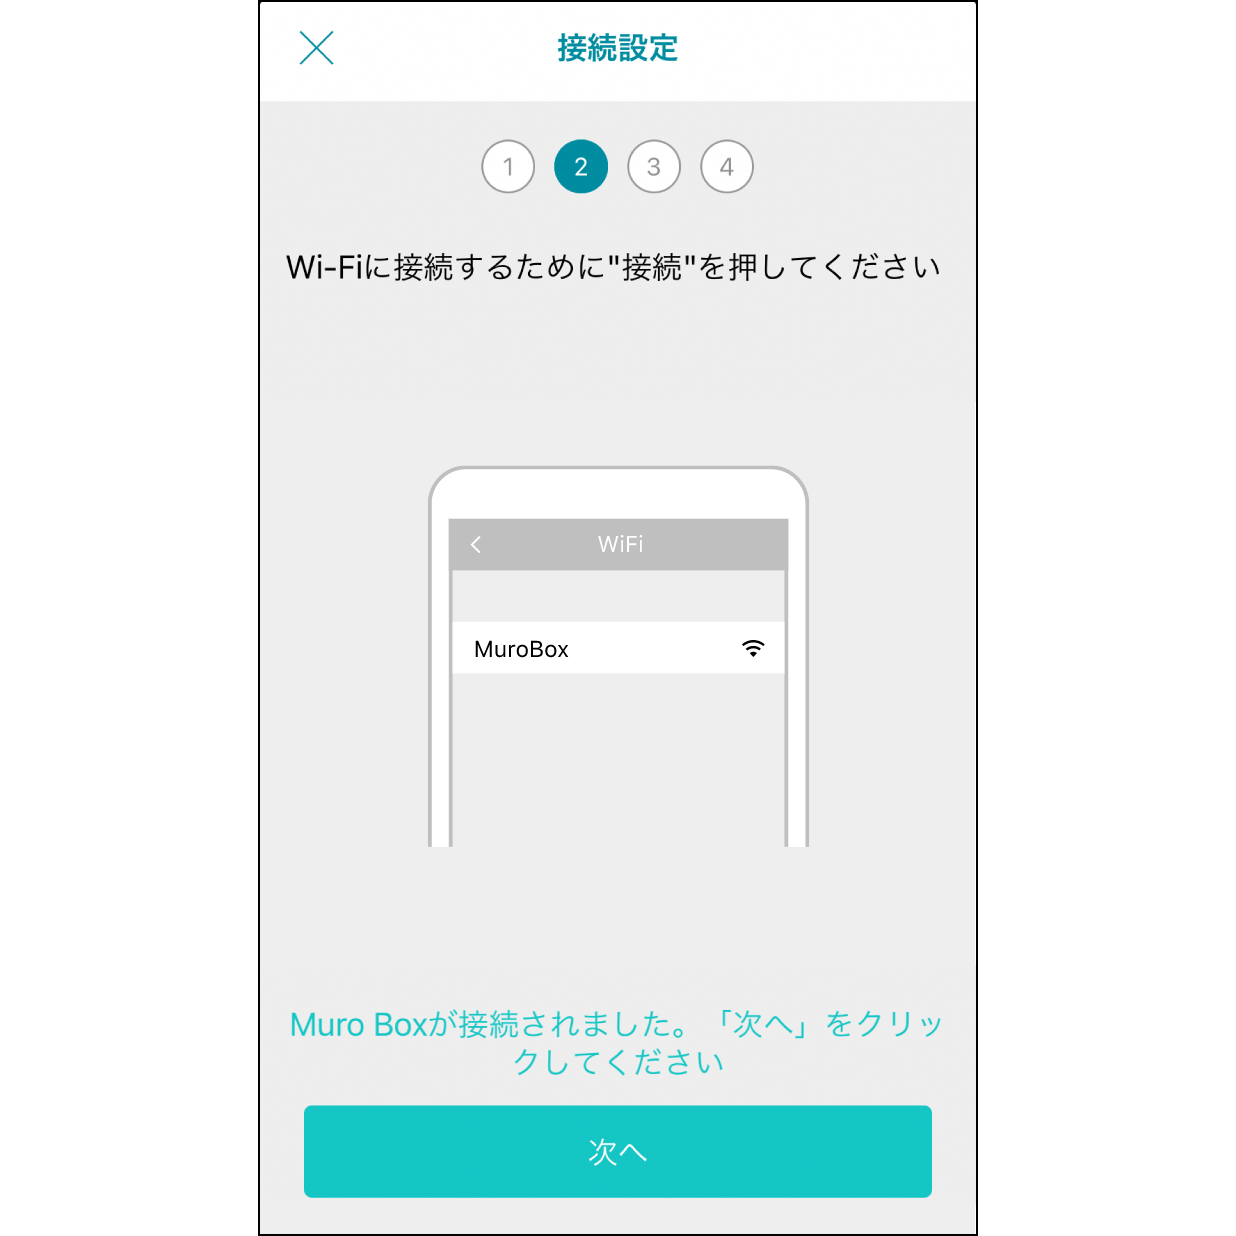 2. Muro BoxをWi-Fiに接続 (iOSユーザー） - Muro Box